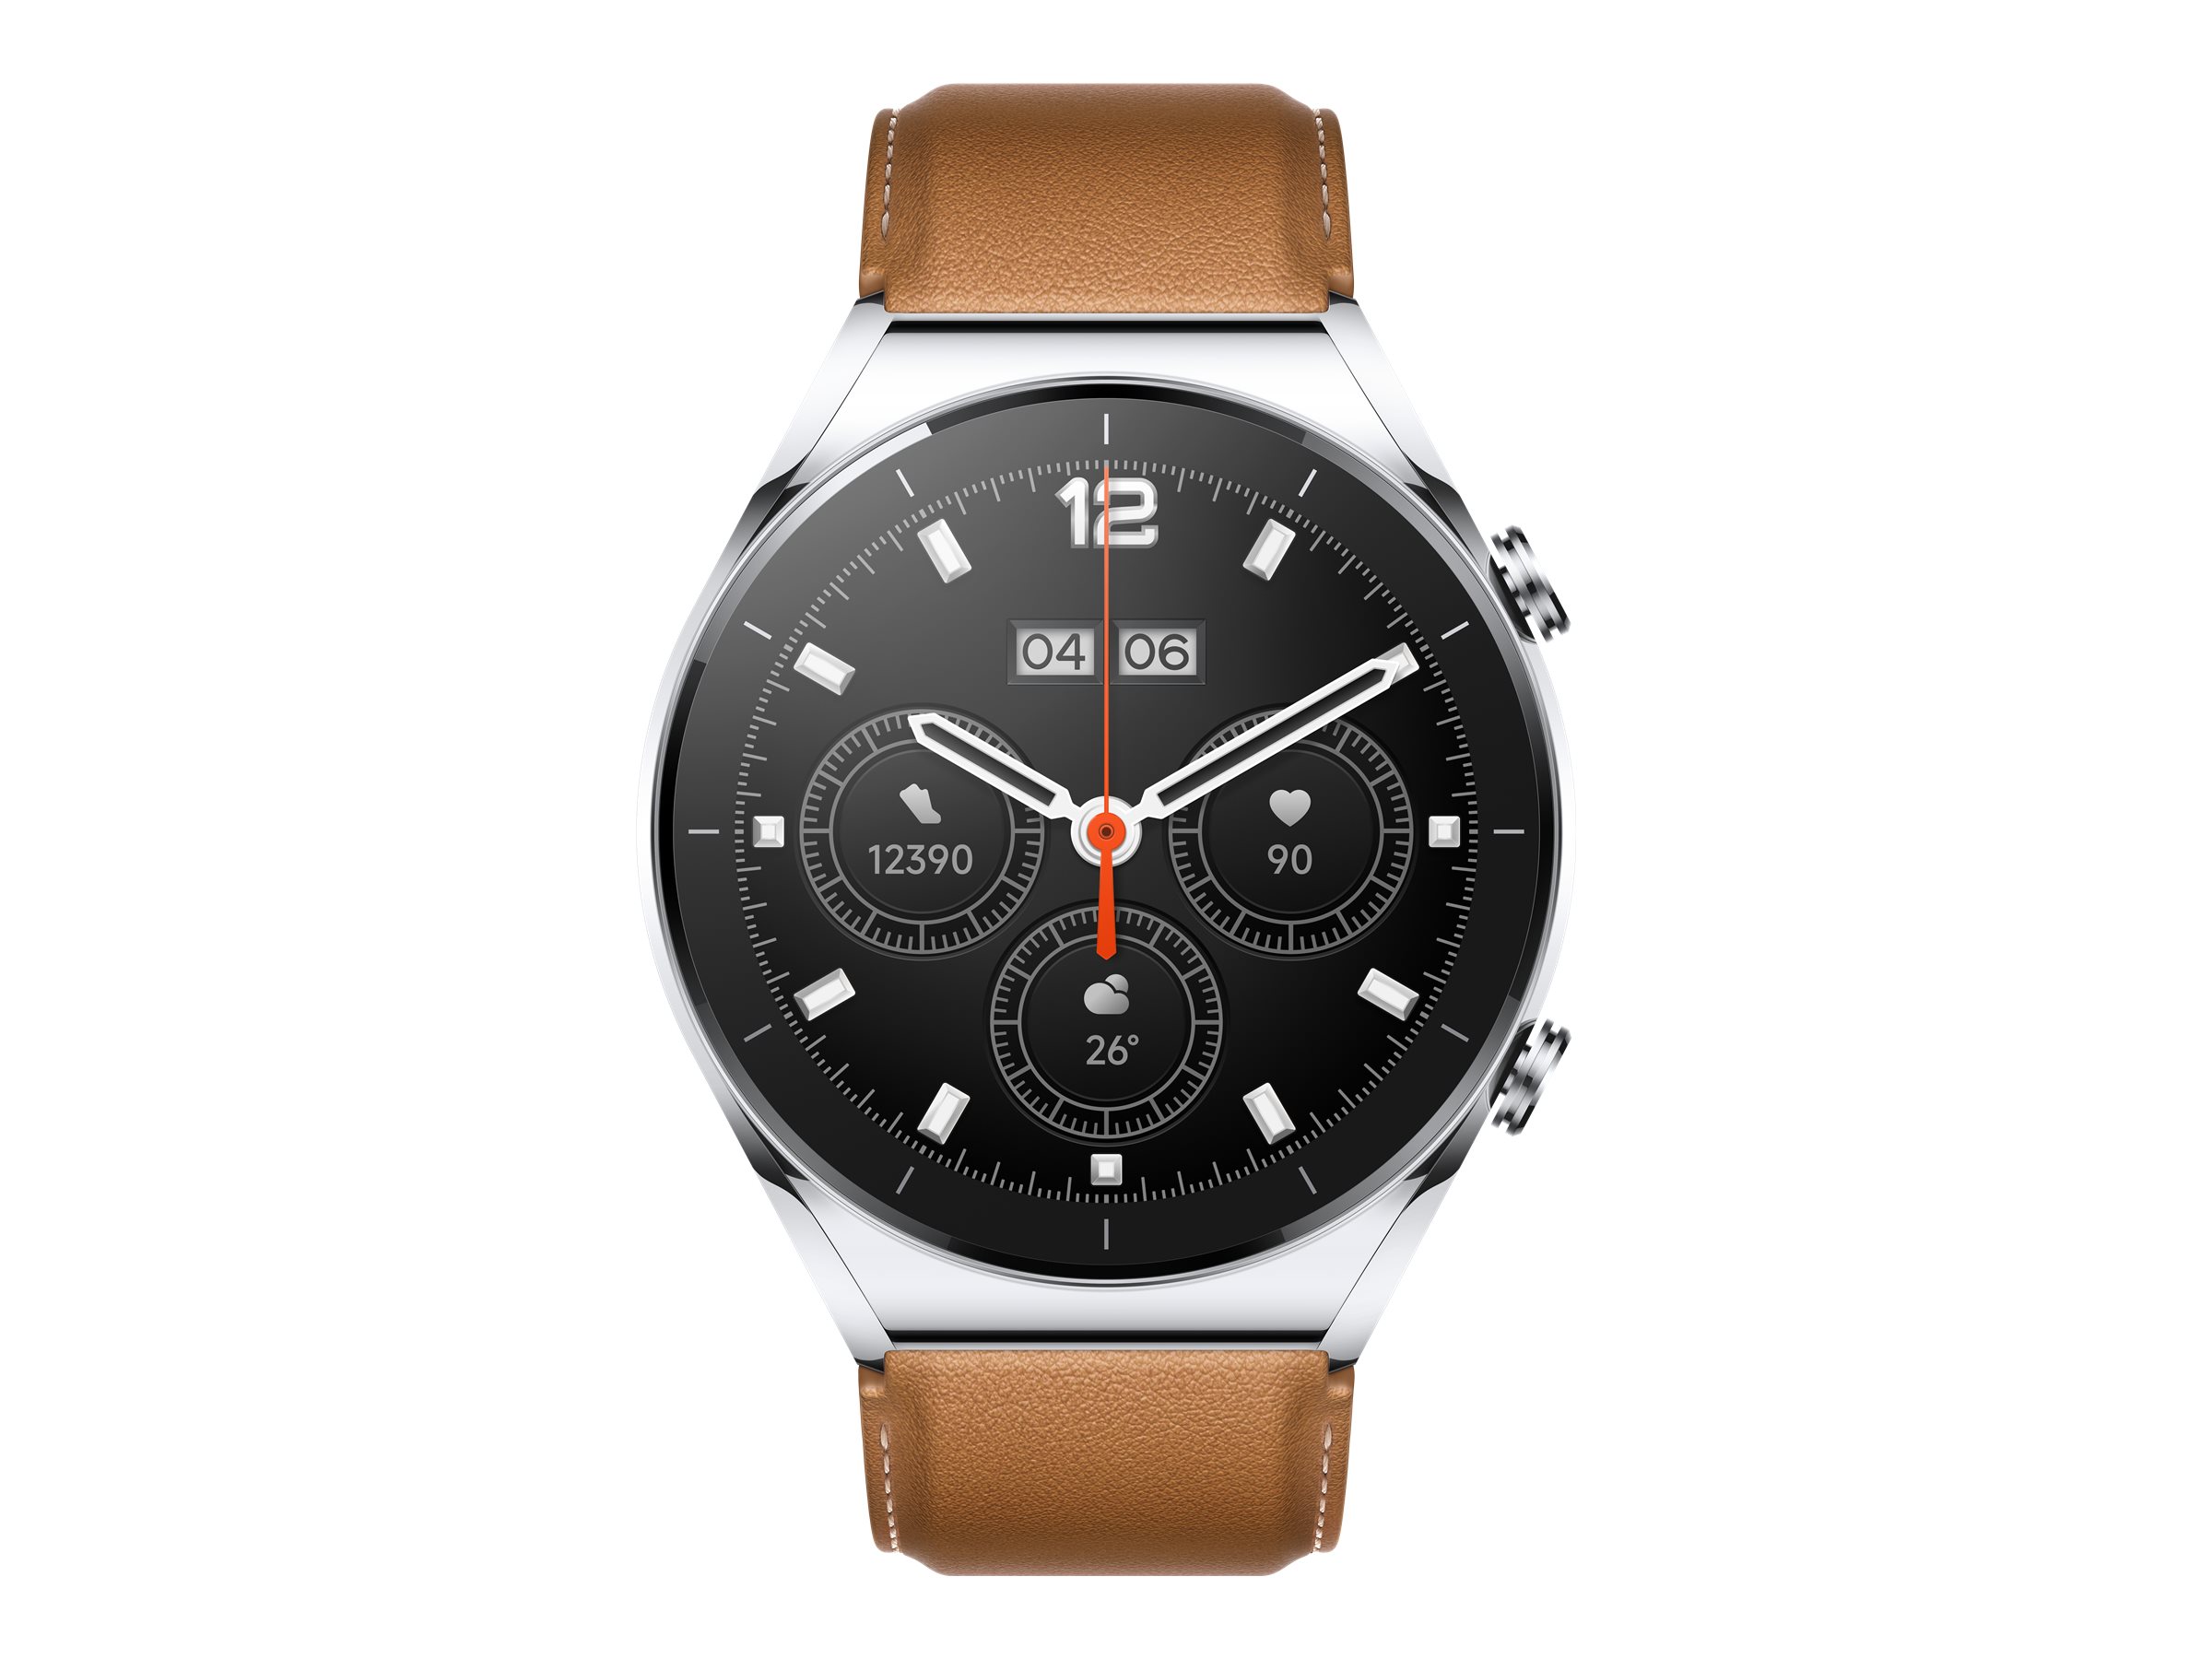 Xiaomi Watch S1 comparison